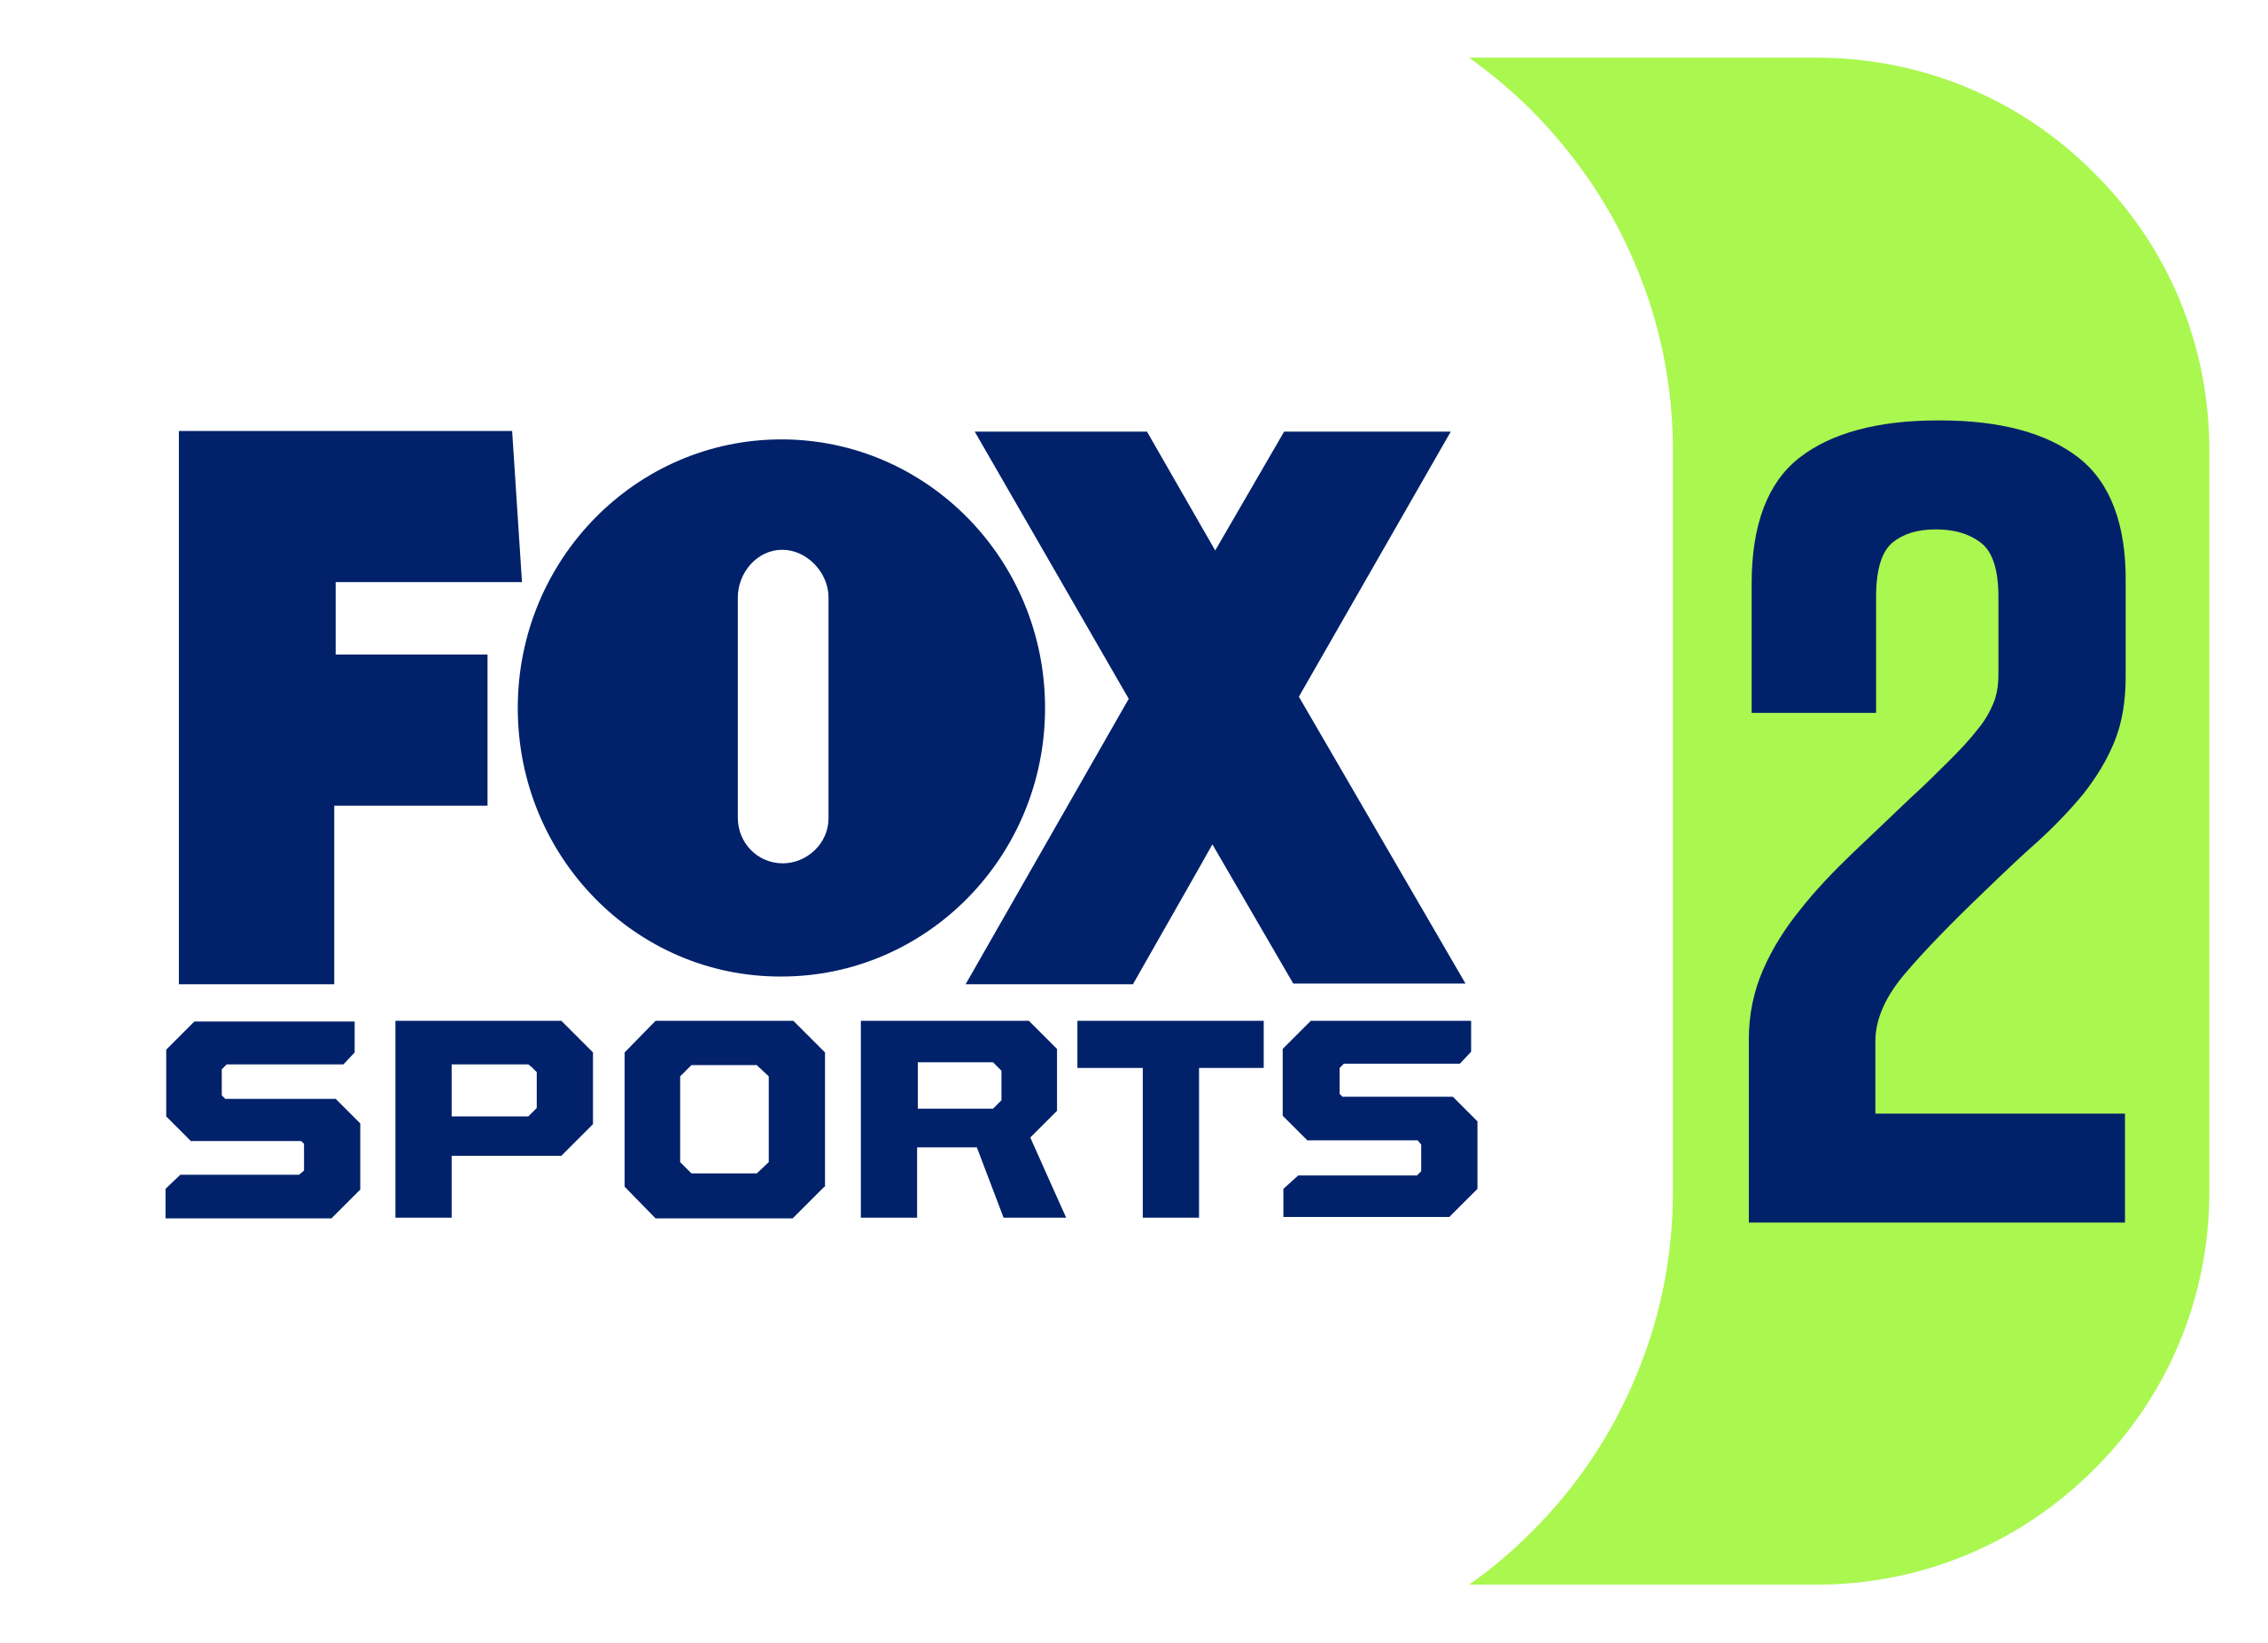 Ver Fox Sports 2 en Vivo